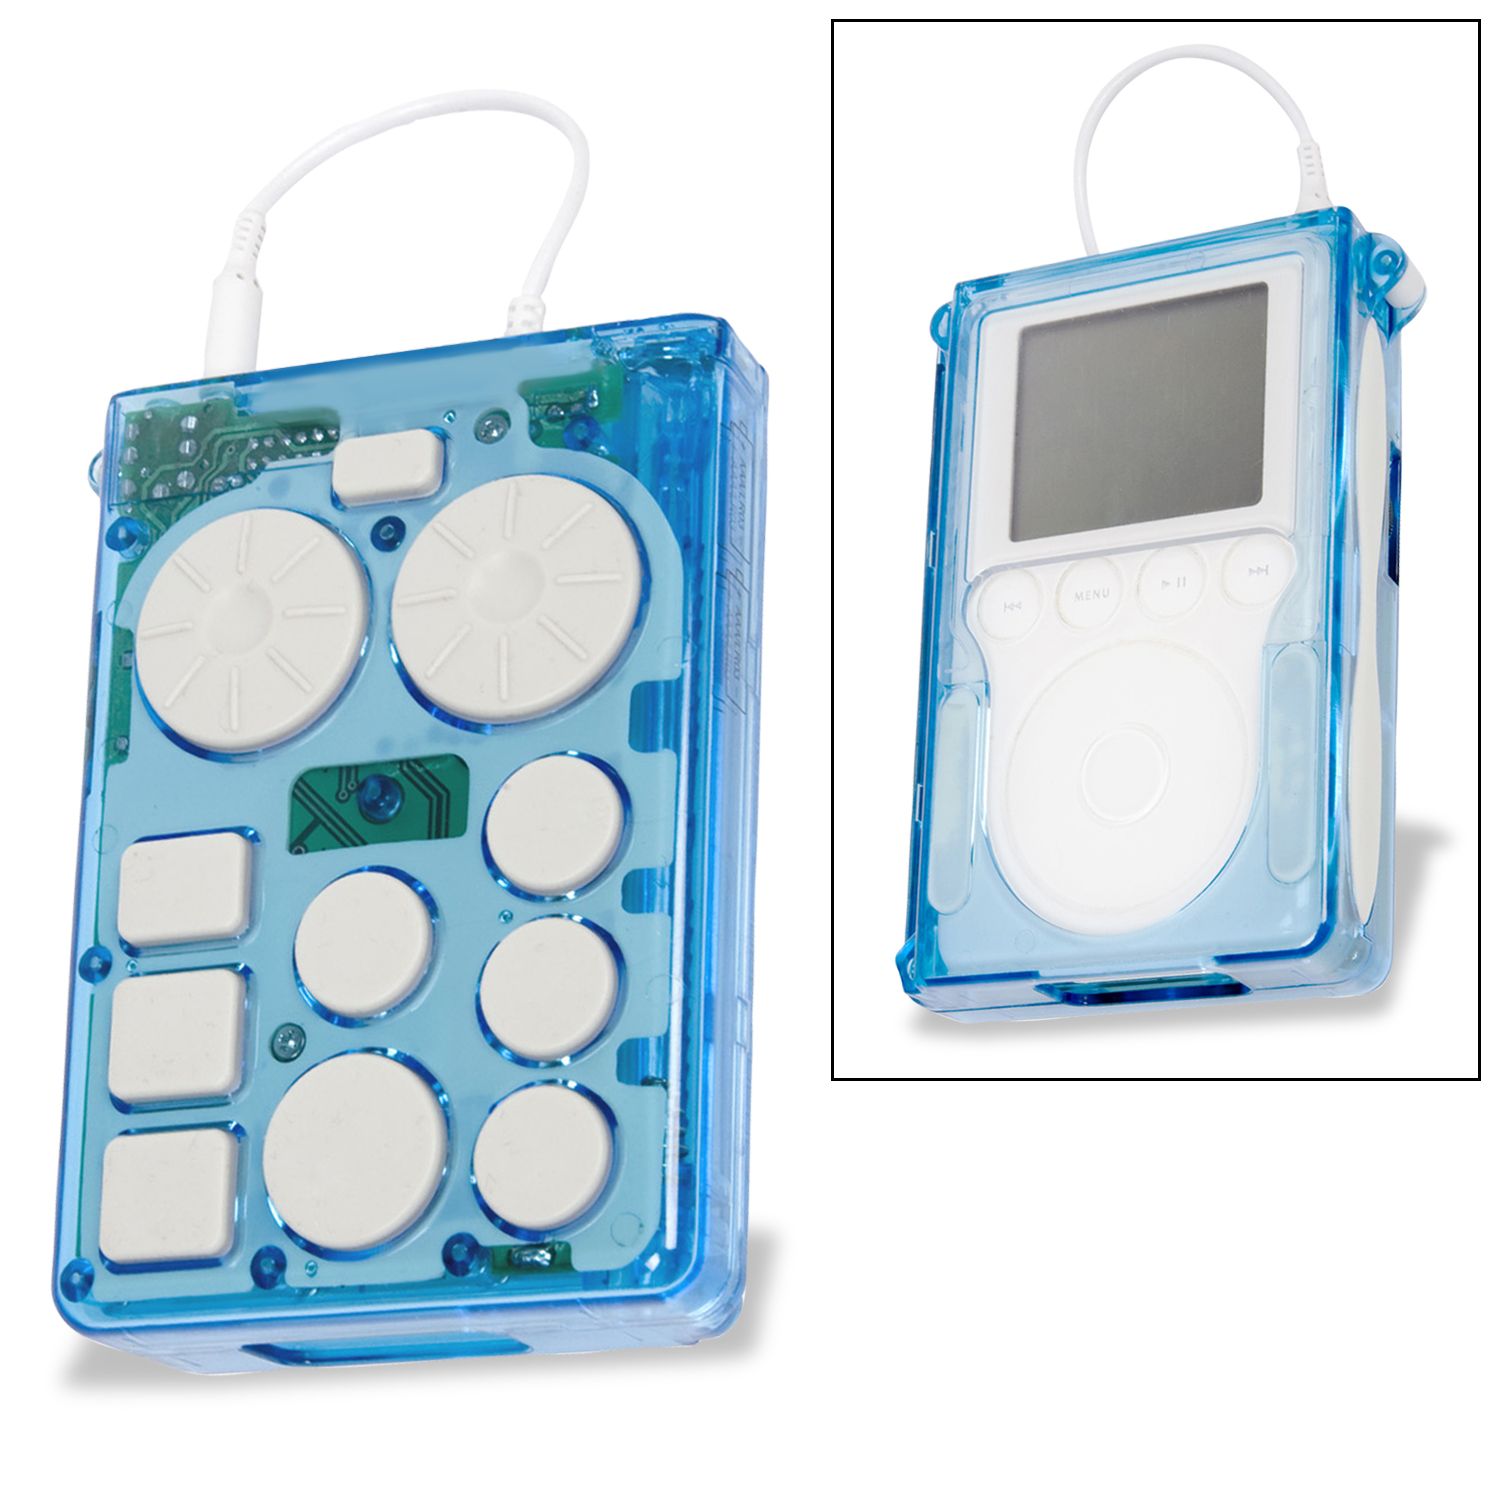 764357B Blue Beatz Case for iPod